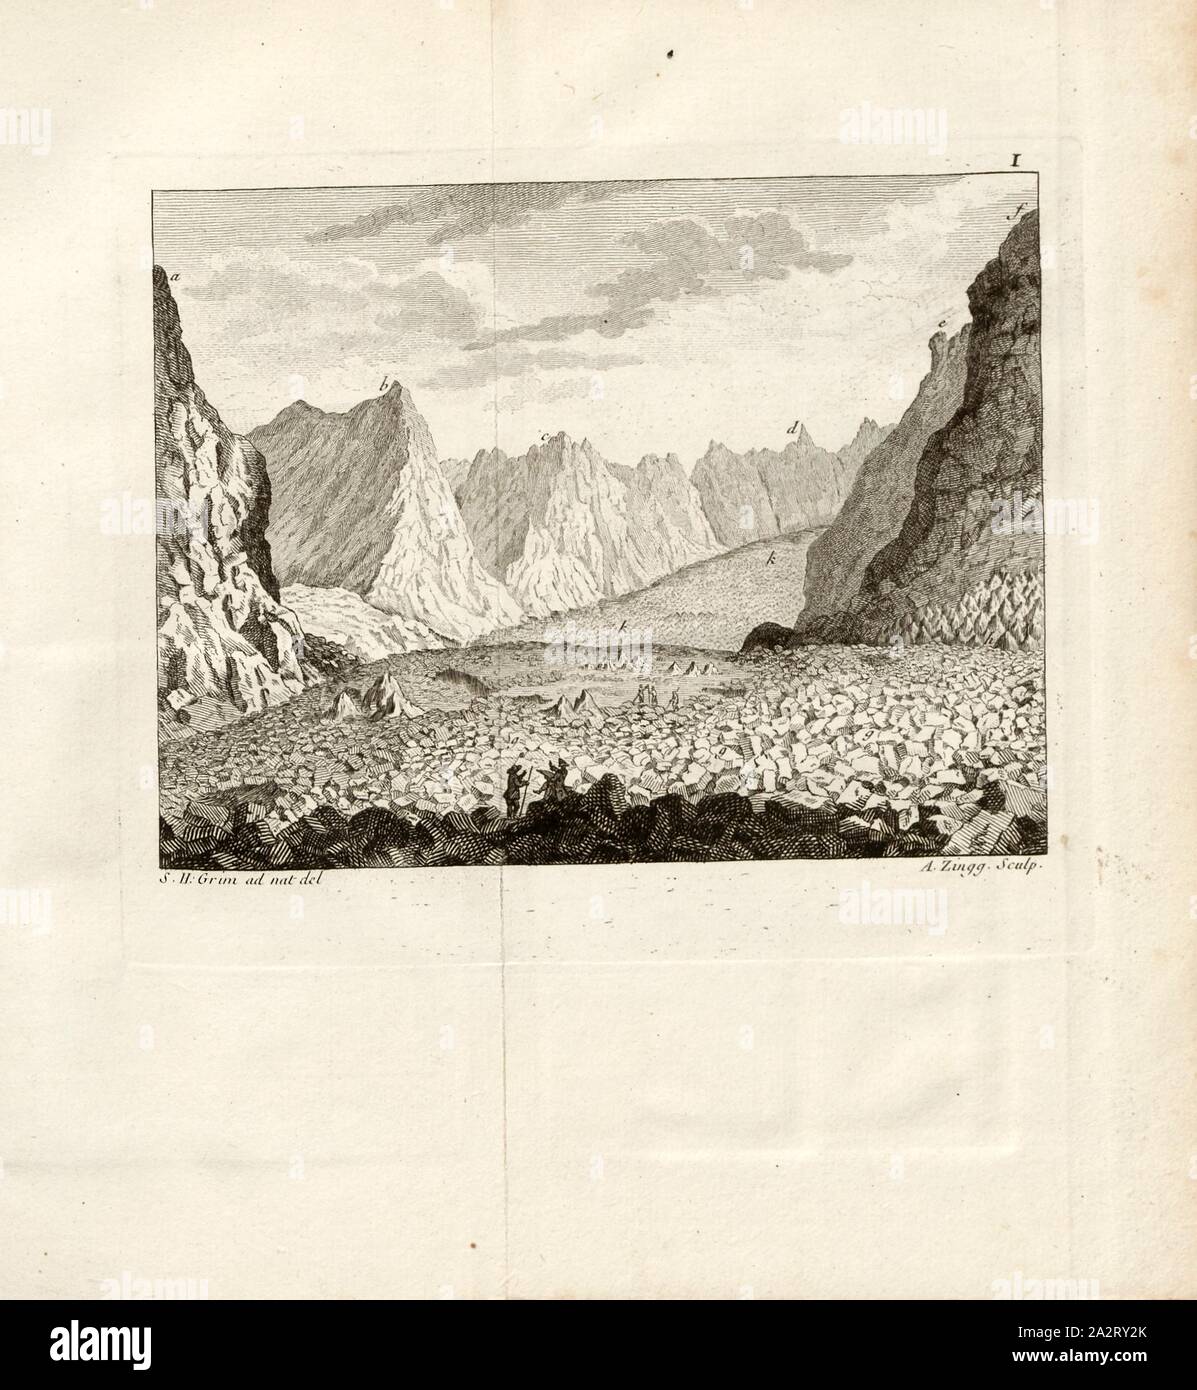 Il cluster Lauter-Aar nel Cantone di Berna, o Grimsel valle di ghiaccio, vista del ghiacciaio Lauteraar, firmato: S. H. Grim (ad Nat. Del.); A. Zingg (sculp.), Fig. 3, I, dopo p. 372, p. 398, grim, S. H. (ad nat. canc.); Zingg, Adrian (sculp.), 1770, Gottlieb Sigmund Gruner; Louis-Félix Guinement de Keralio: Histoire Naturelle des glacieres de Suisse. Parigi: Panckoucke, MDCCLXX [1770 Foto Stock